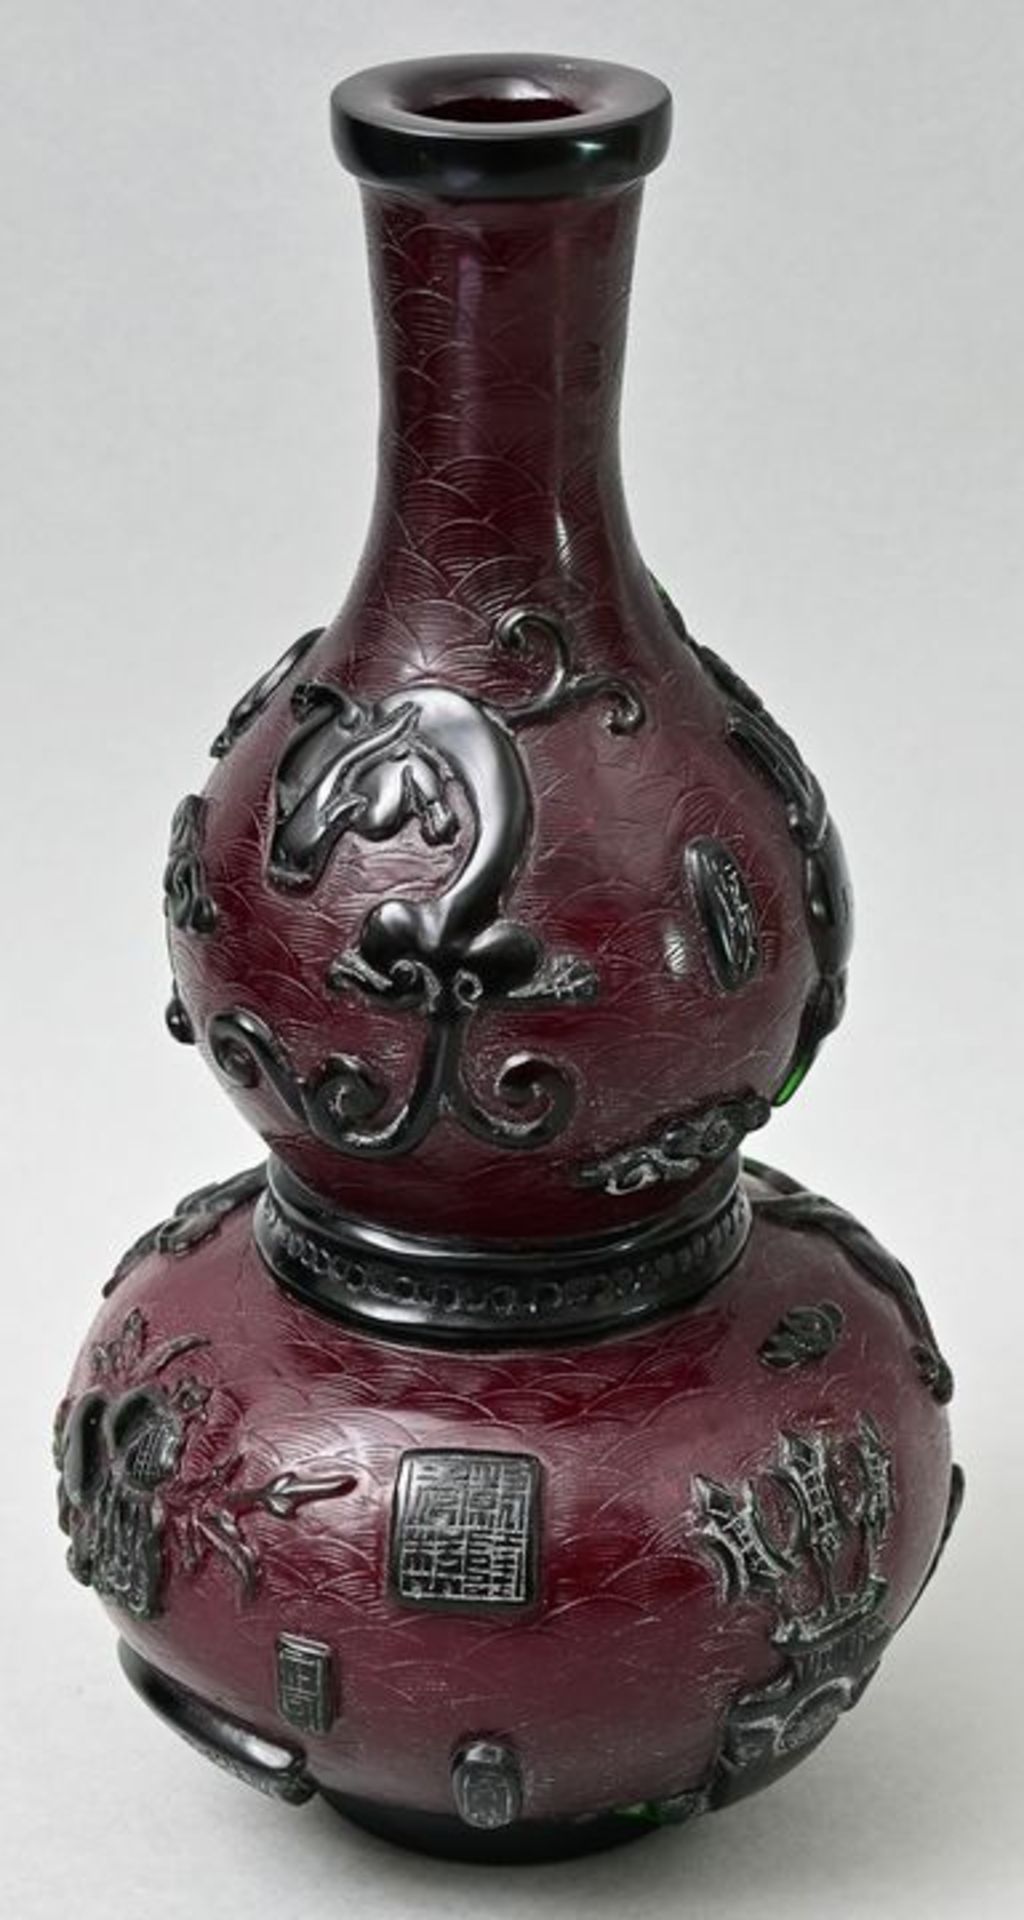 Flaschenvase Peking-Glas/ Peking glass bottle - Image 5 of 5